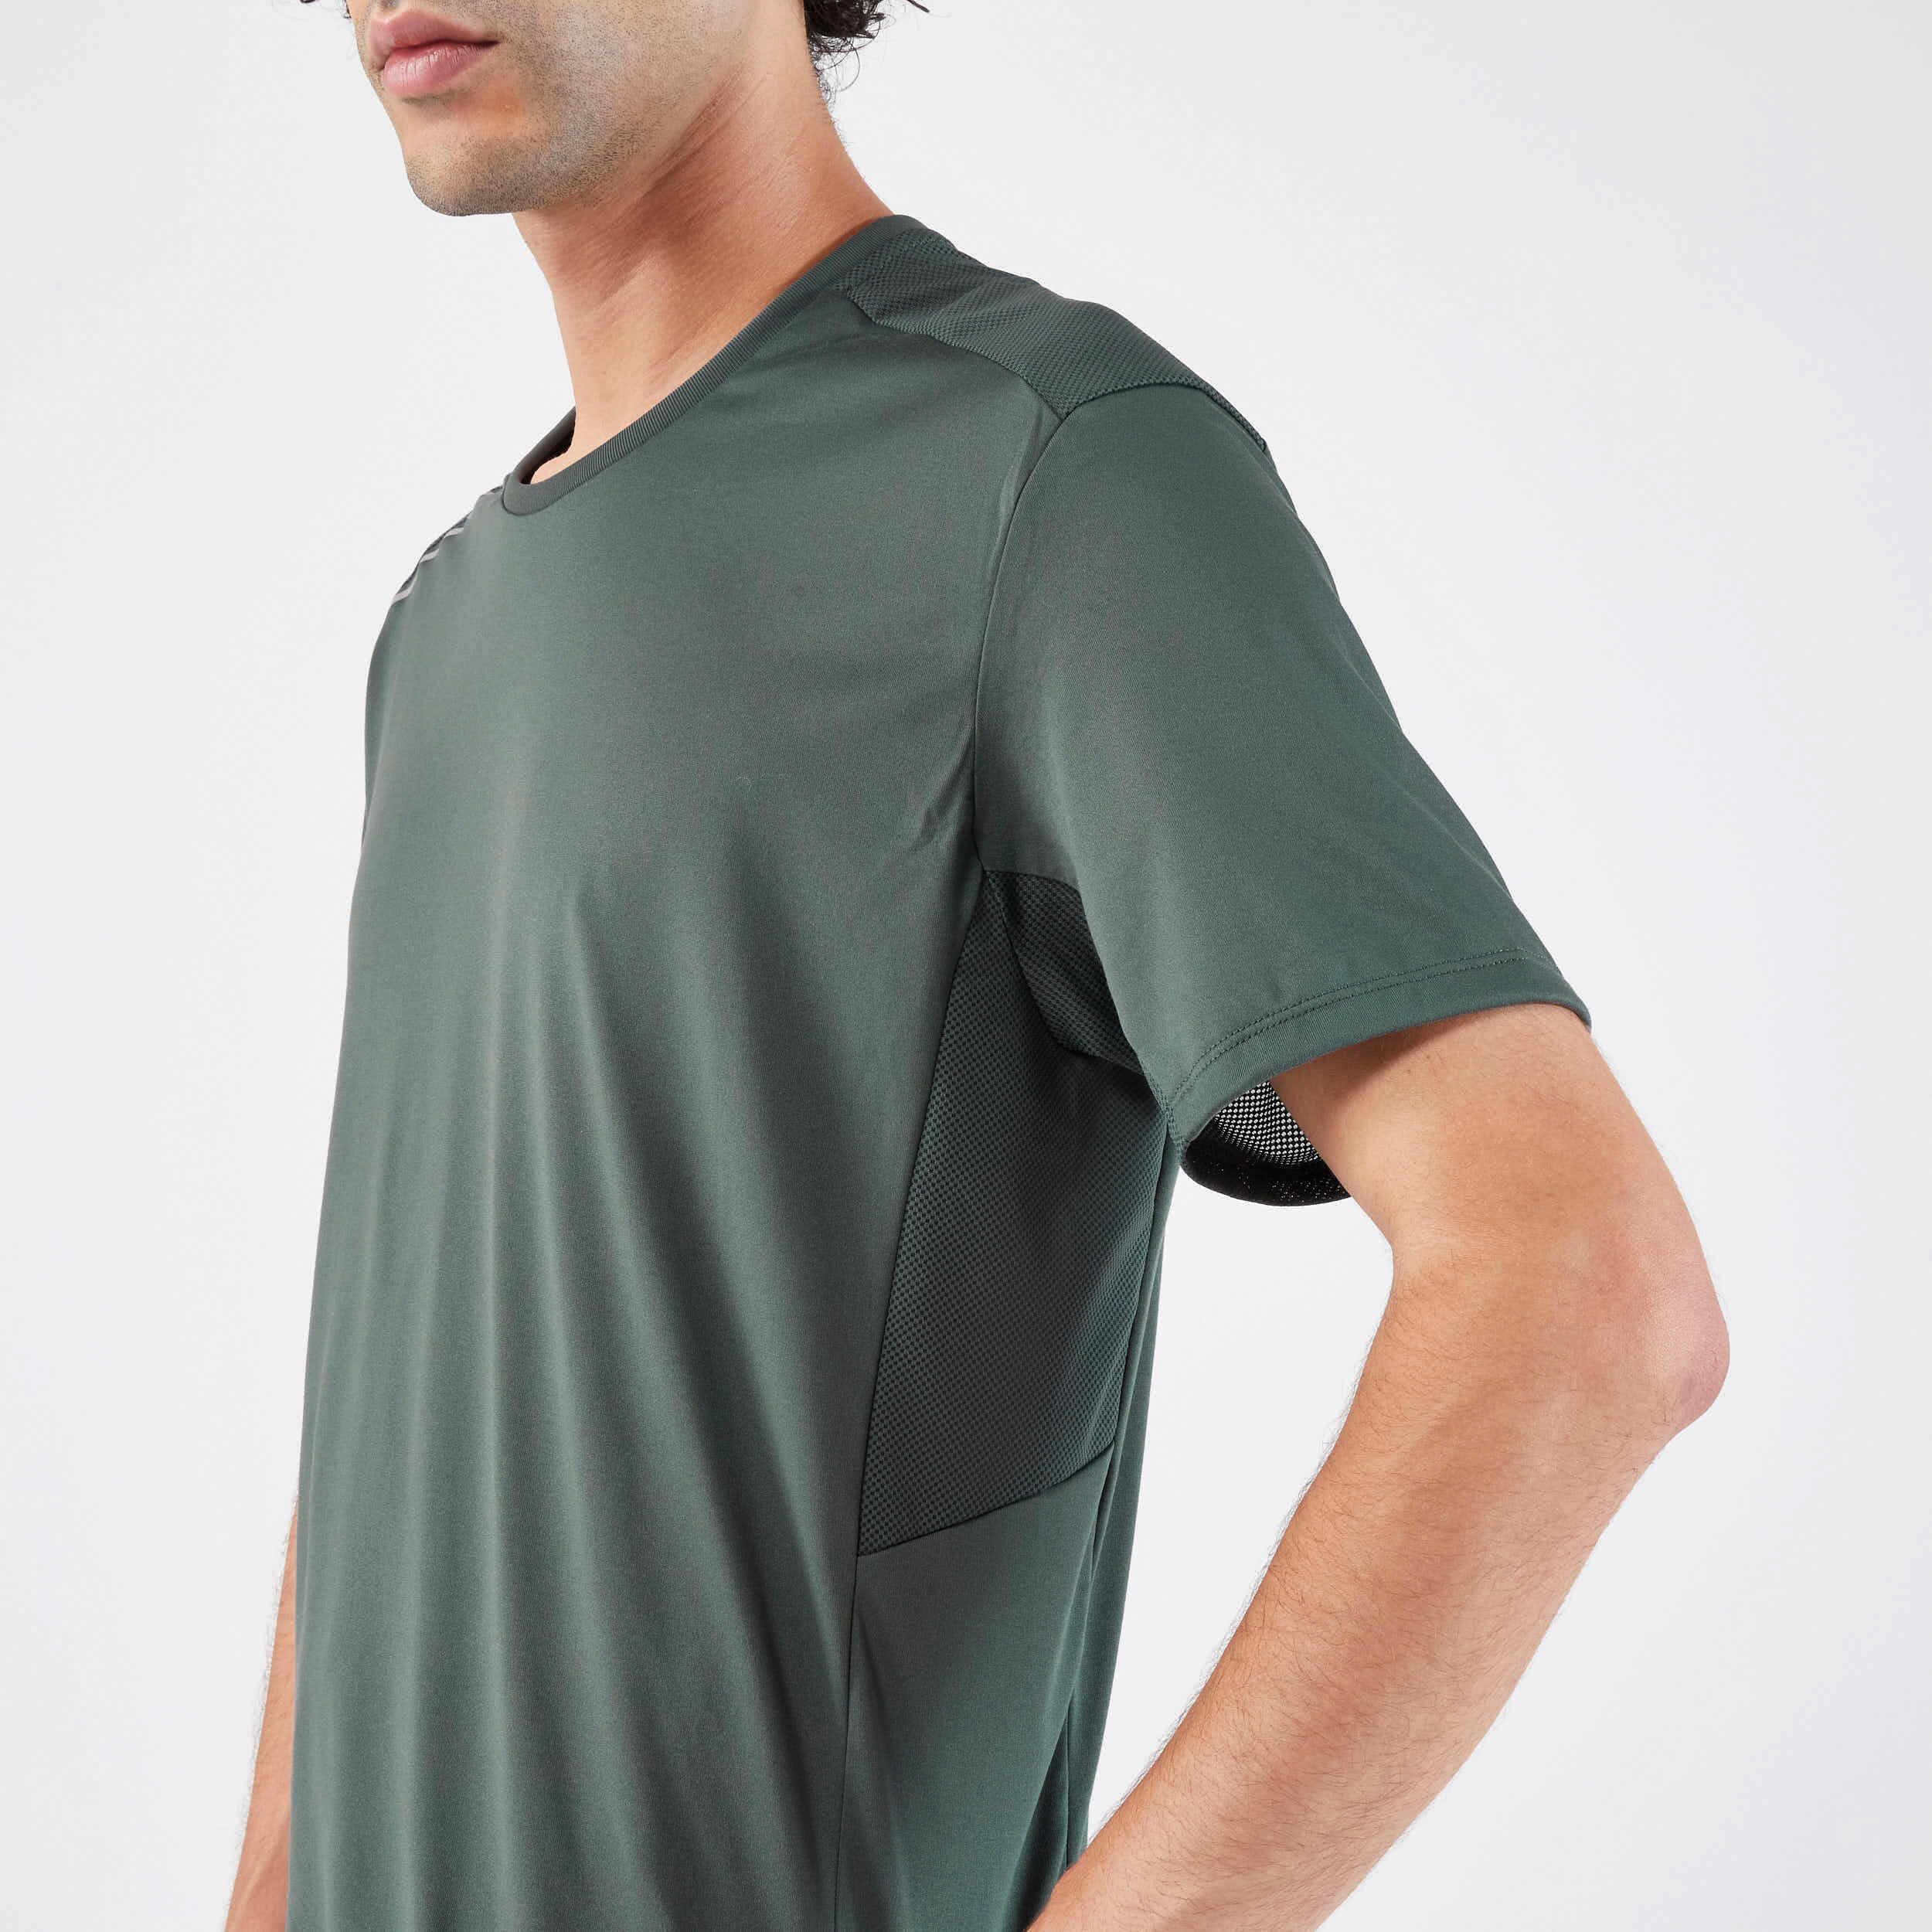 Dry+ Men's Running Breathable Tee-Shirt - Dark Green 4/5